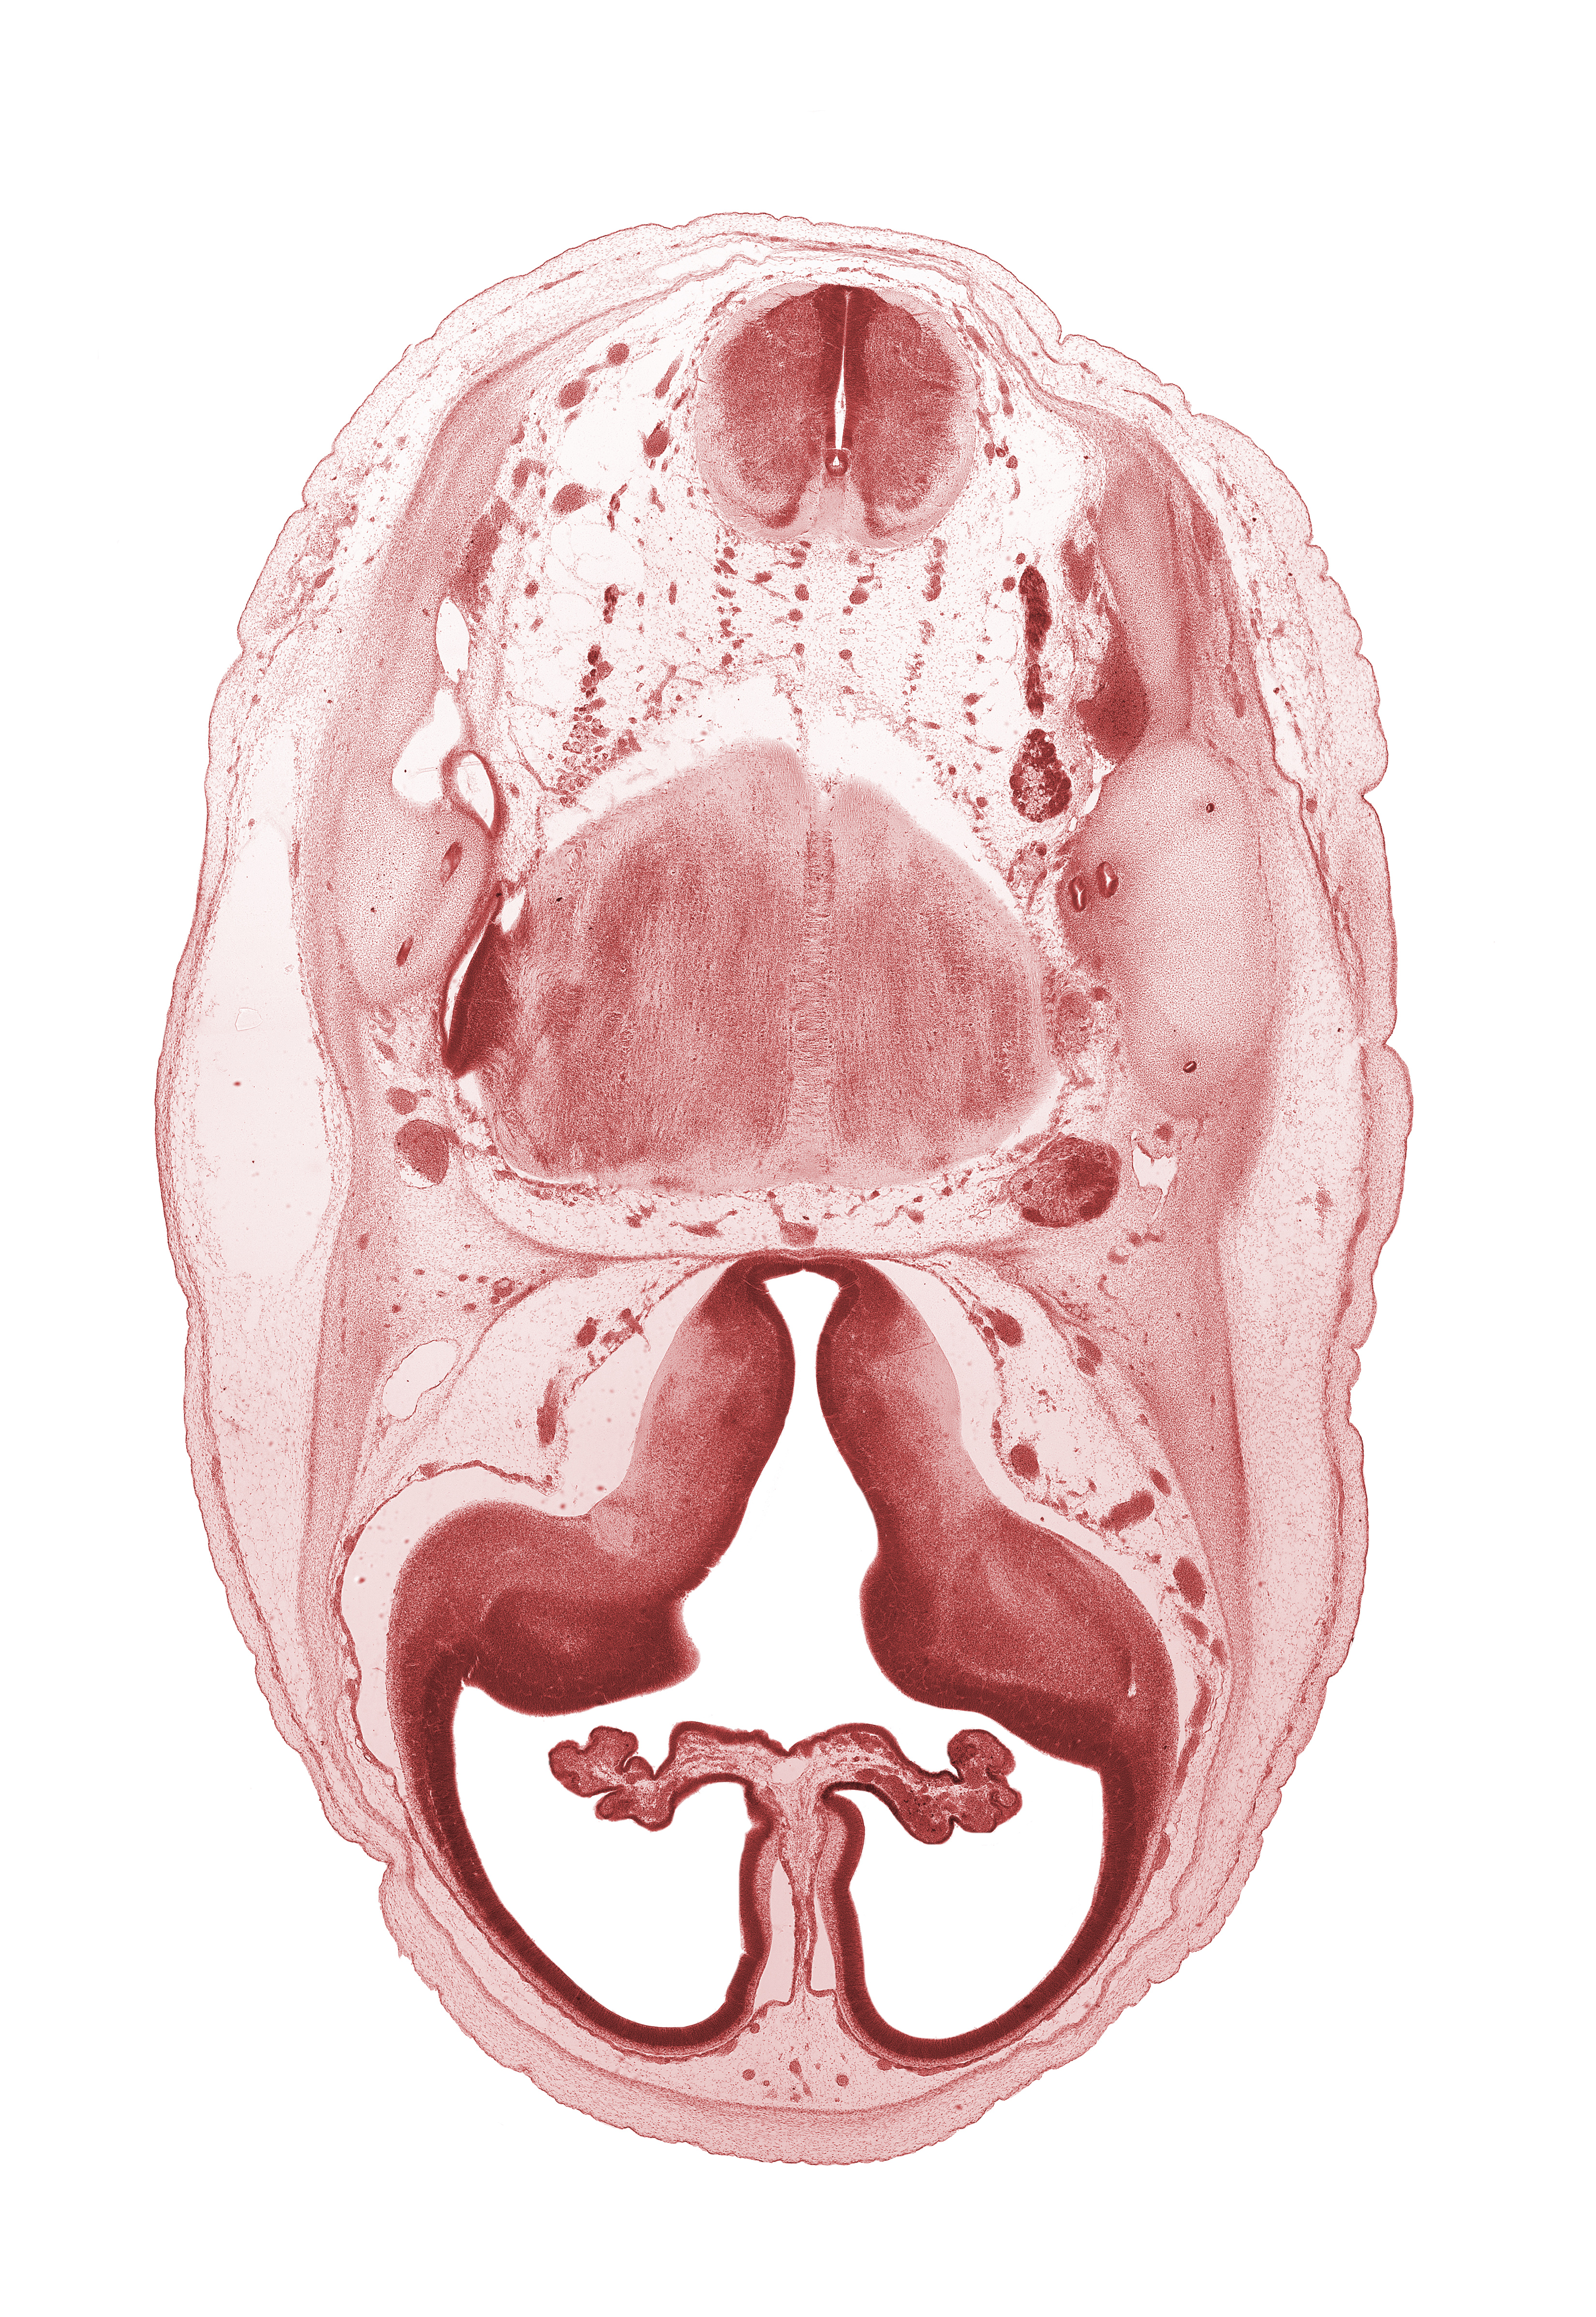 accessory nerve (CN XI), artifact separation(s), basilar artery, choroid fissure, choroid plexus, falx cerebri region, hypothalamic sulcus, hypothalamus, intermediate zone, interventricular foramen, lateral ventricular eminence (telencephalon), marginal zone, medial ventricular eminence (diencephalon), myelencephalon (medulla oblongata), pons region (metencephalon), pyramidal tract region, root of accessory nerve (CN XI), root of glossopharyngeal nerve (CN IX), root of vestibulocochlear nerve (CN VIII), superior ganglion of vagus nerve (CN X), trigeminal nerve (CN V), ventricular zone